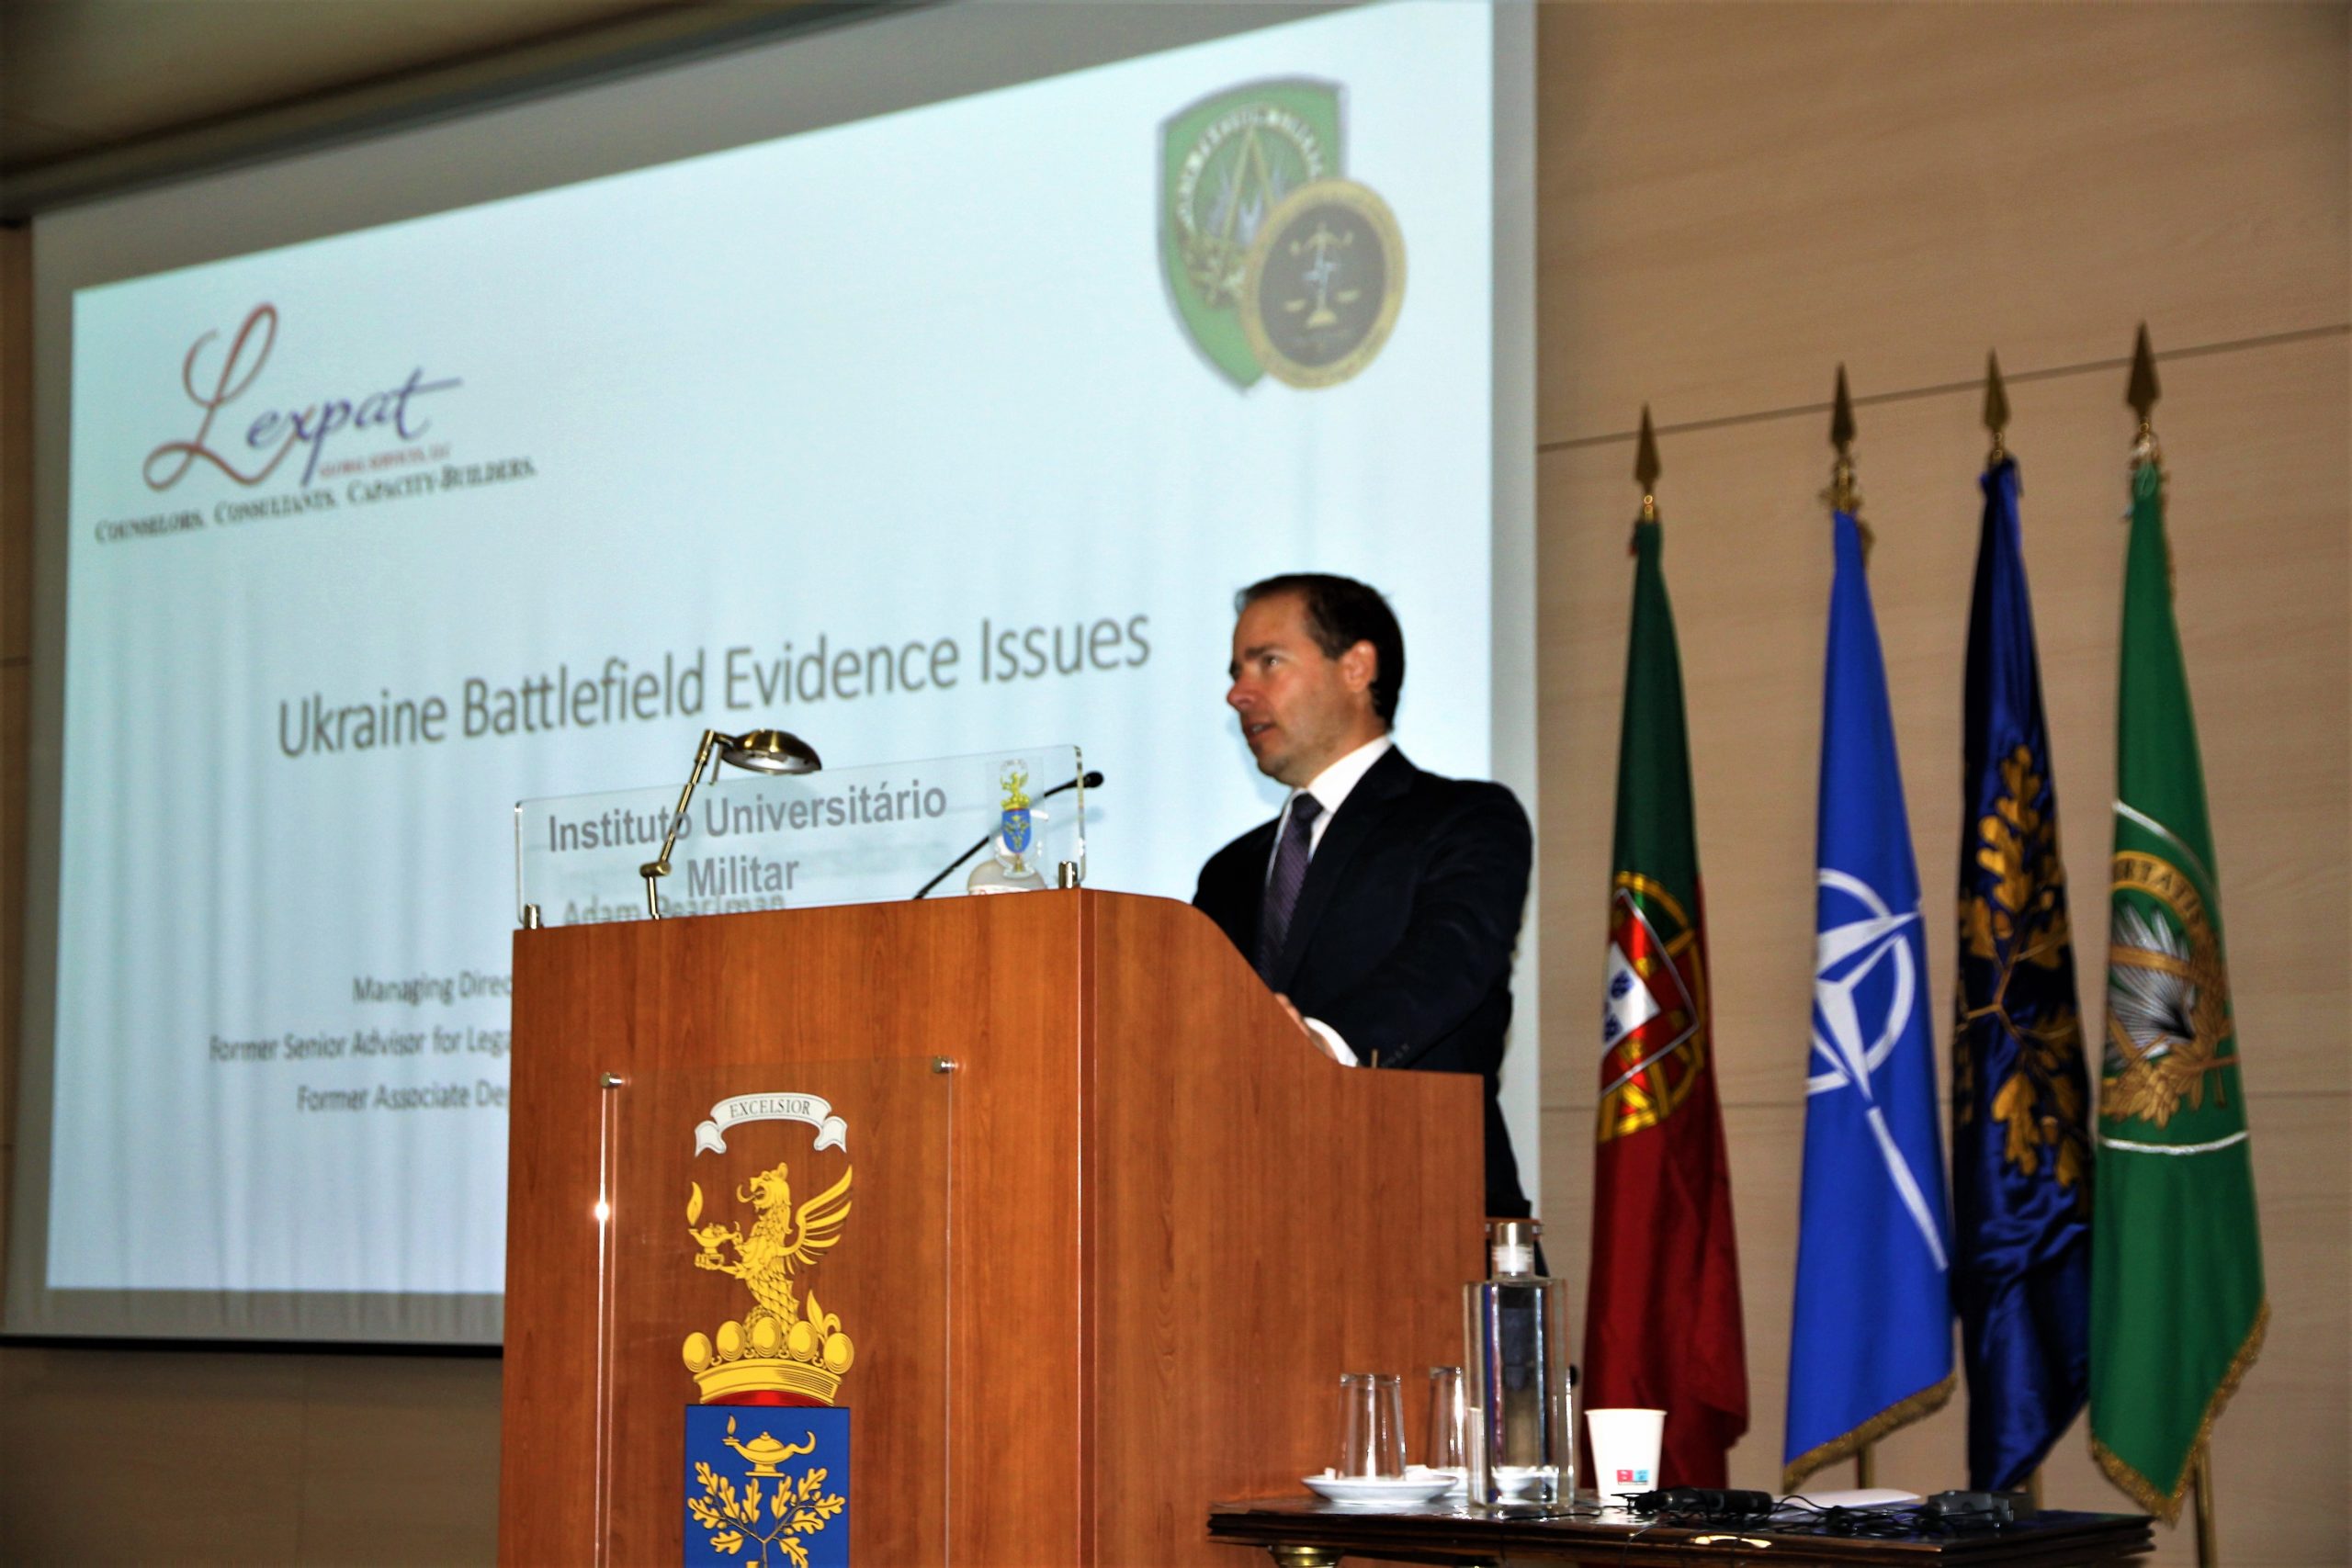 Adam Pearlman presenting at NATO ILC on battlefield evidence